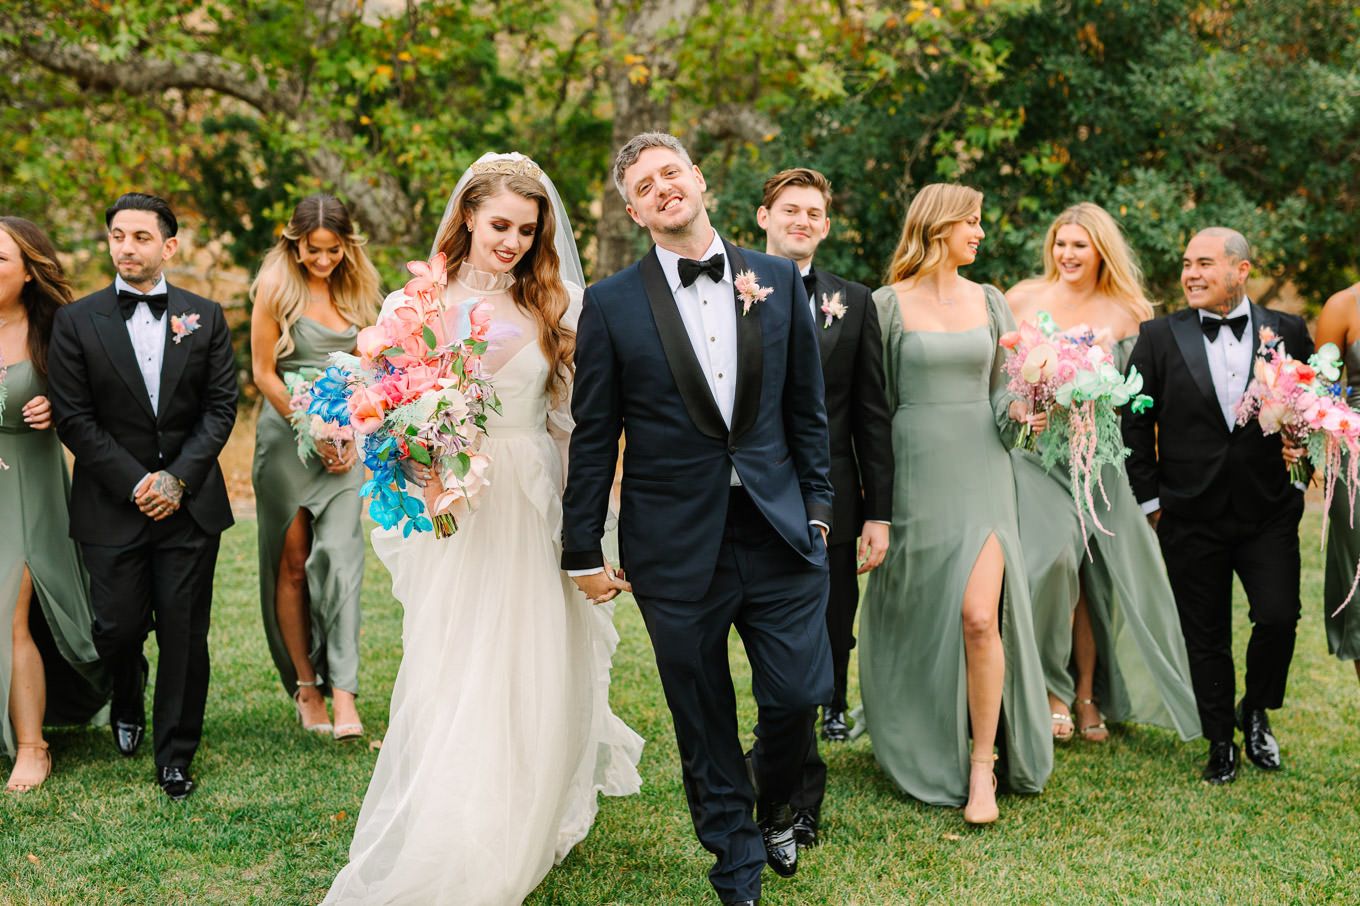 Allison Harvard & Jeremy Burke wedding party portraits | Colorful and quirky wedding at Higuera Ranch in San Luis Obispo | #sanluisobispowedding #californiawedding #higueraranch #madonnainn   
Source: Mary Costa Photography | Los Angeles